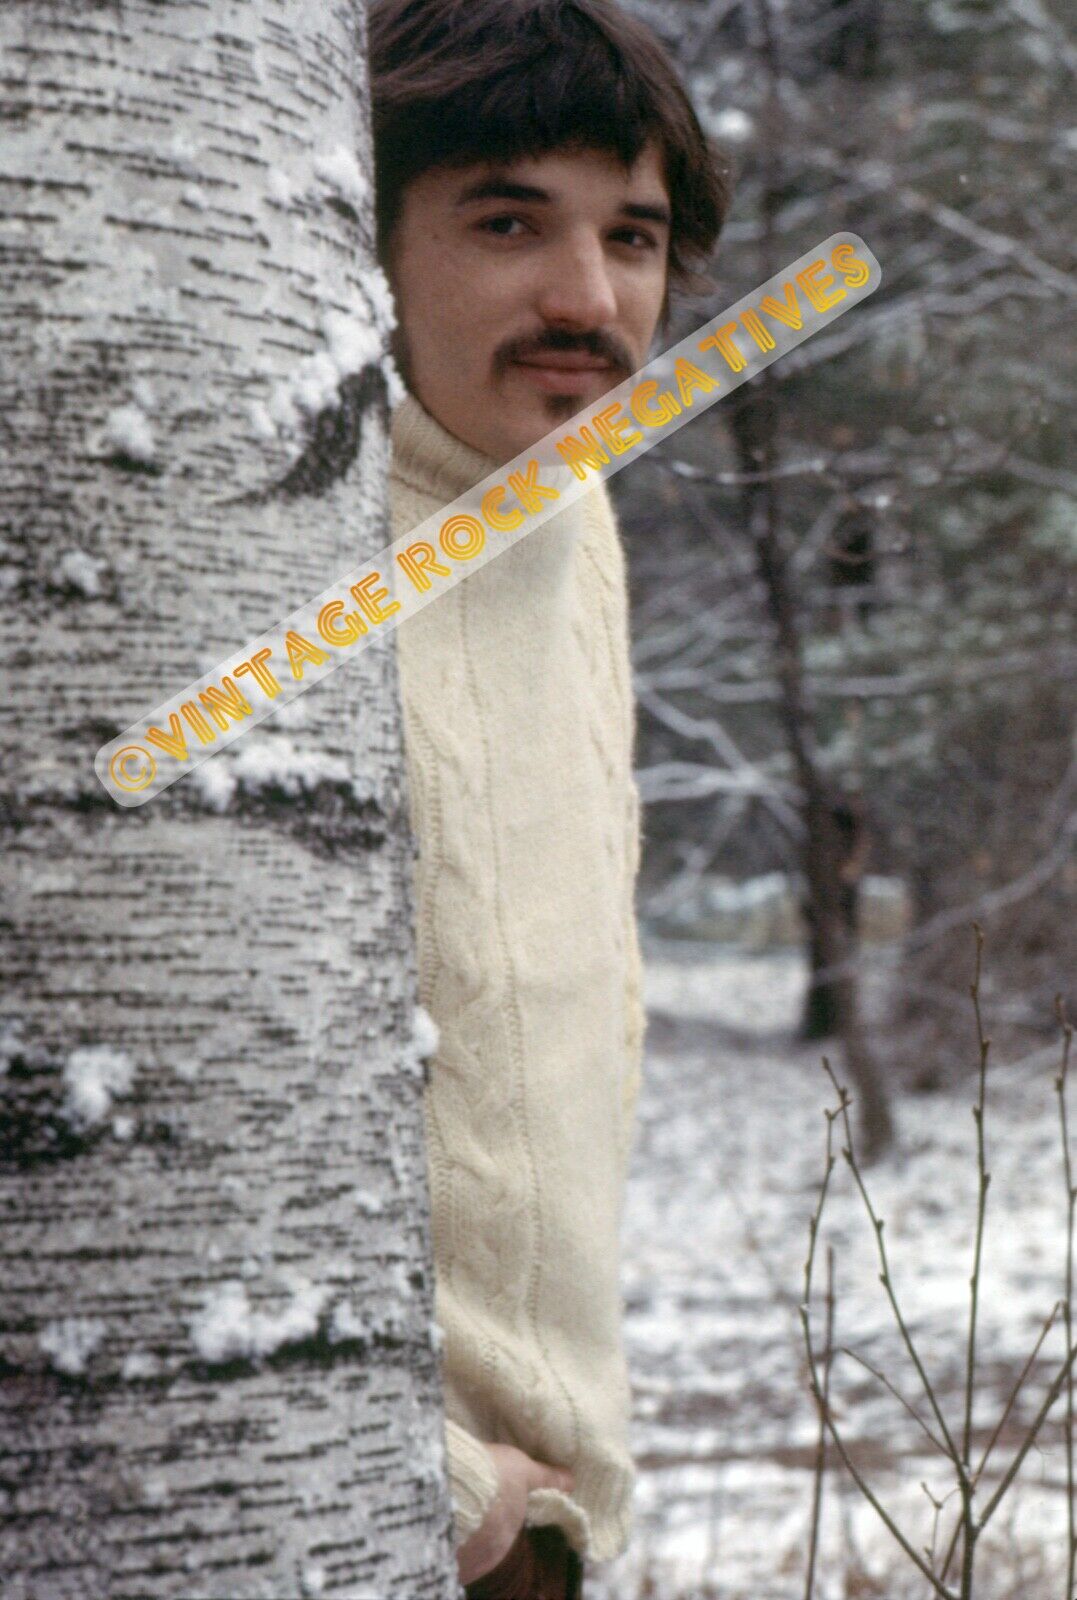 Rick Danko THE BAND in Woodstock Dec '69 - MUSEUM-QUALITY Print (8.5x11) Photo